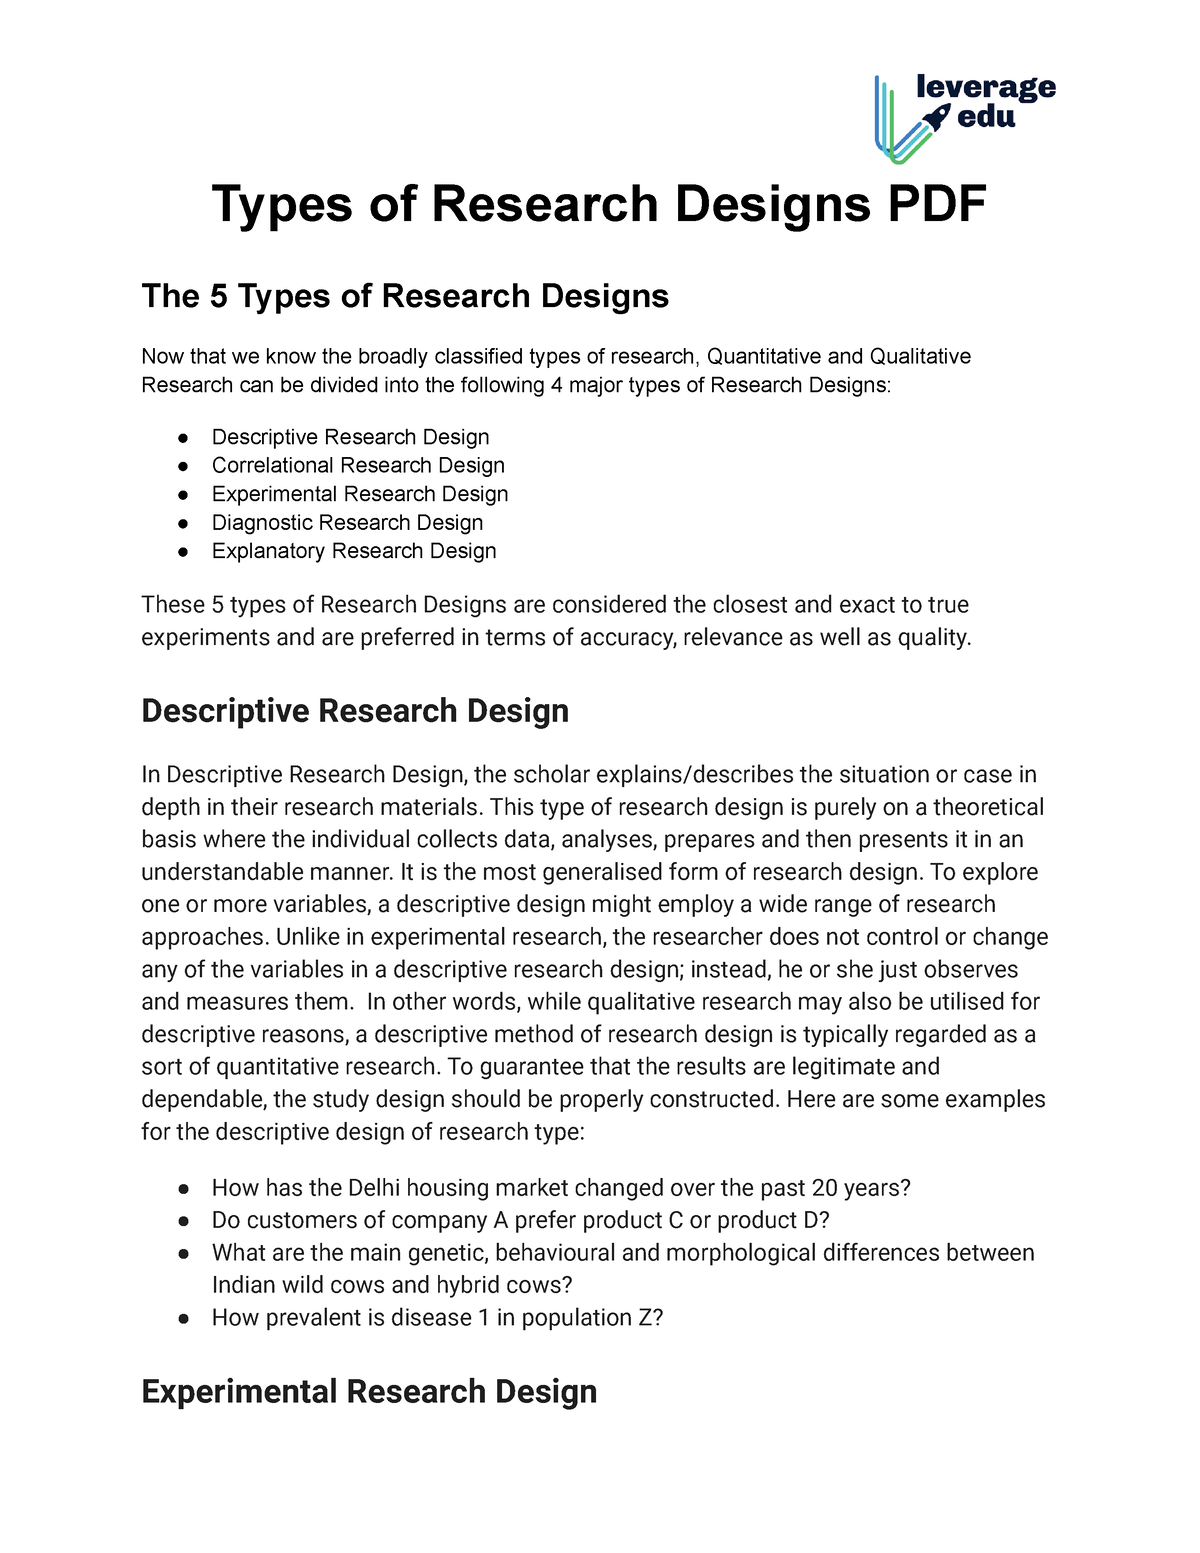 quantitative research design pdf notes